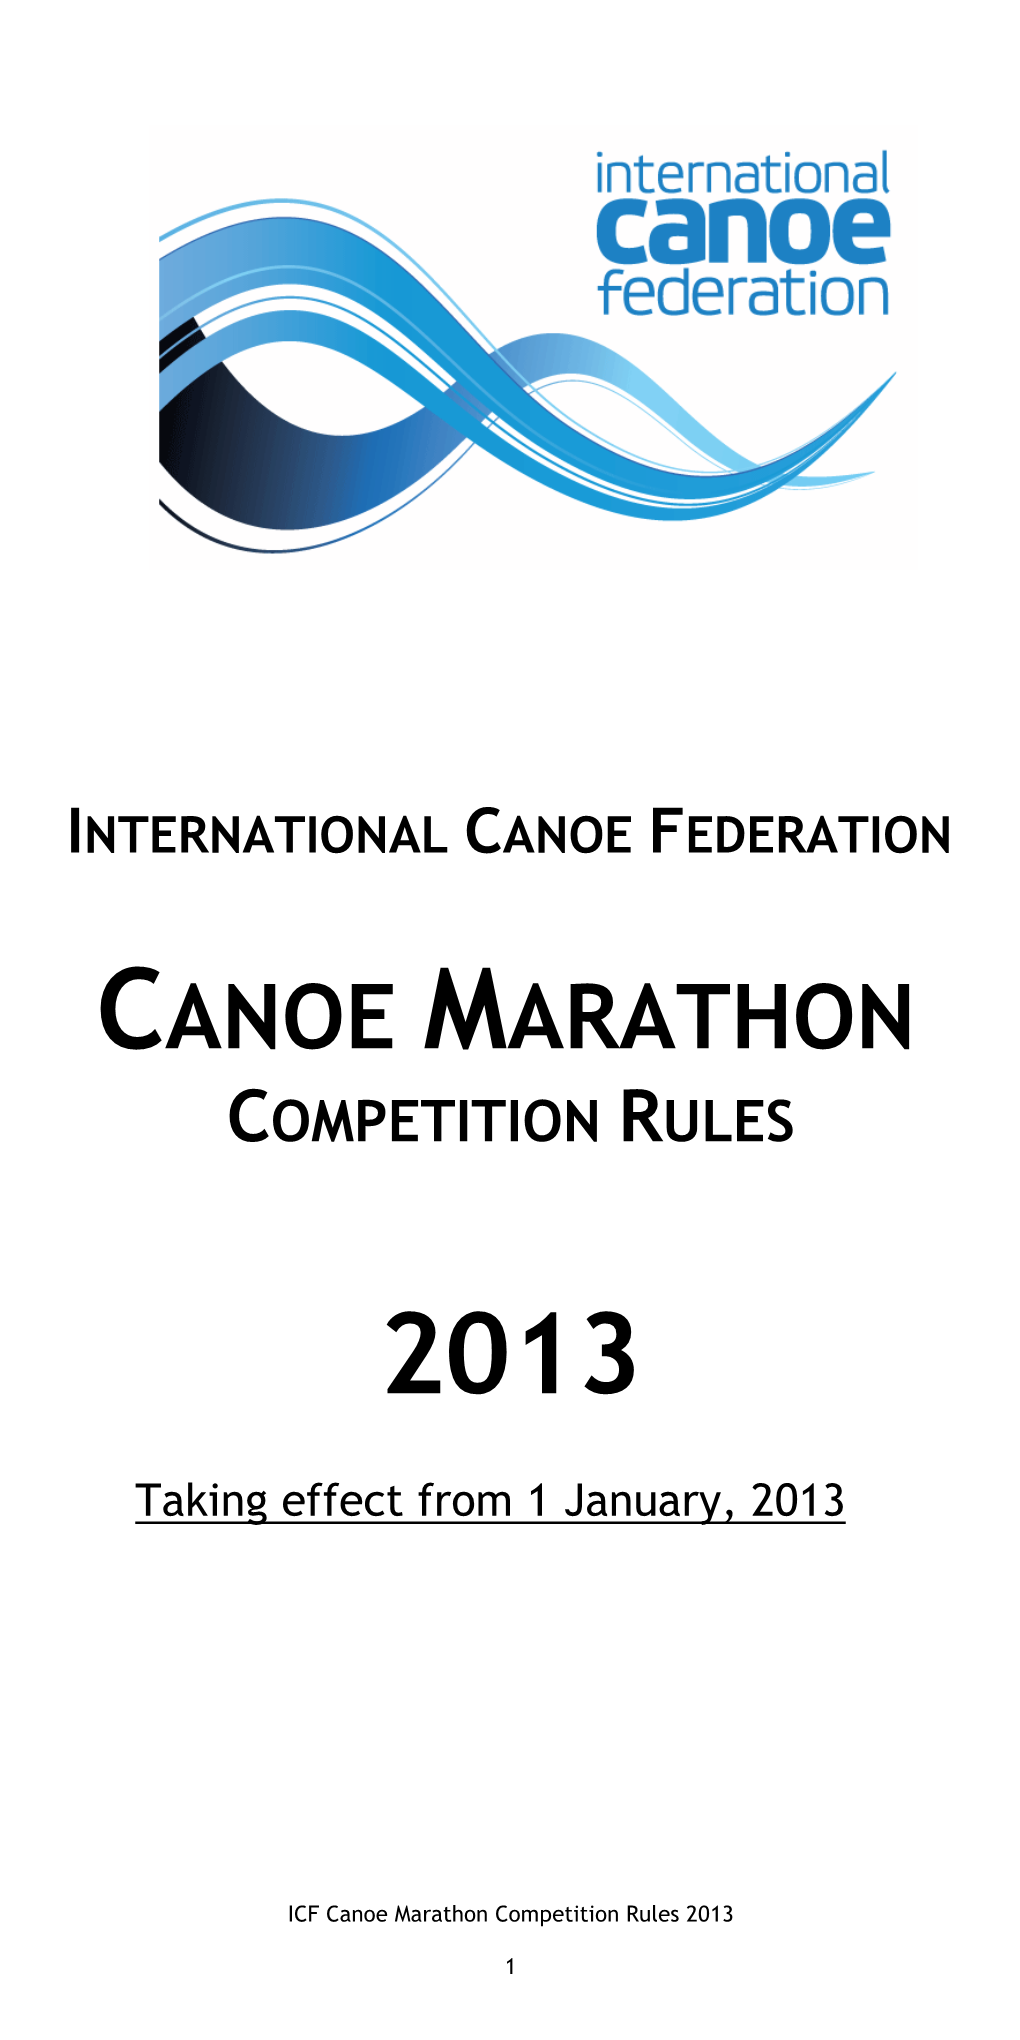 International Canoe Federation Canoe Marathon